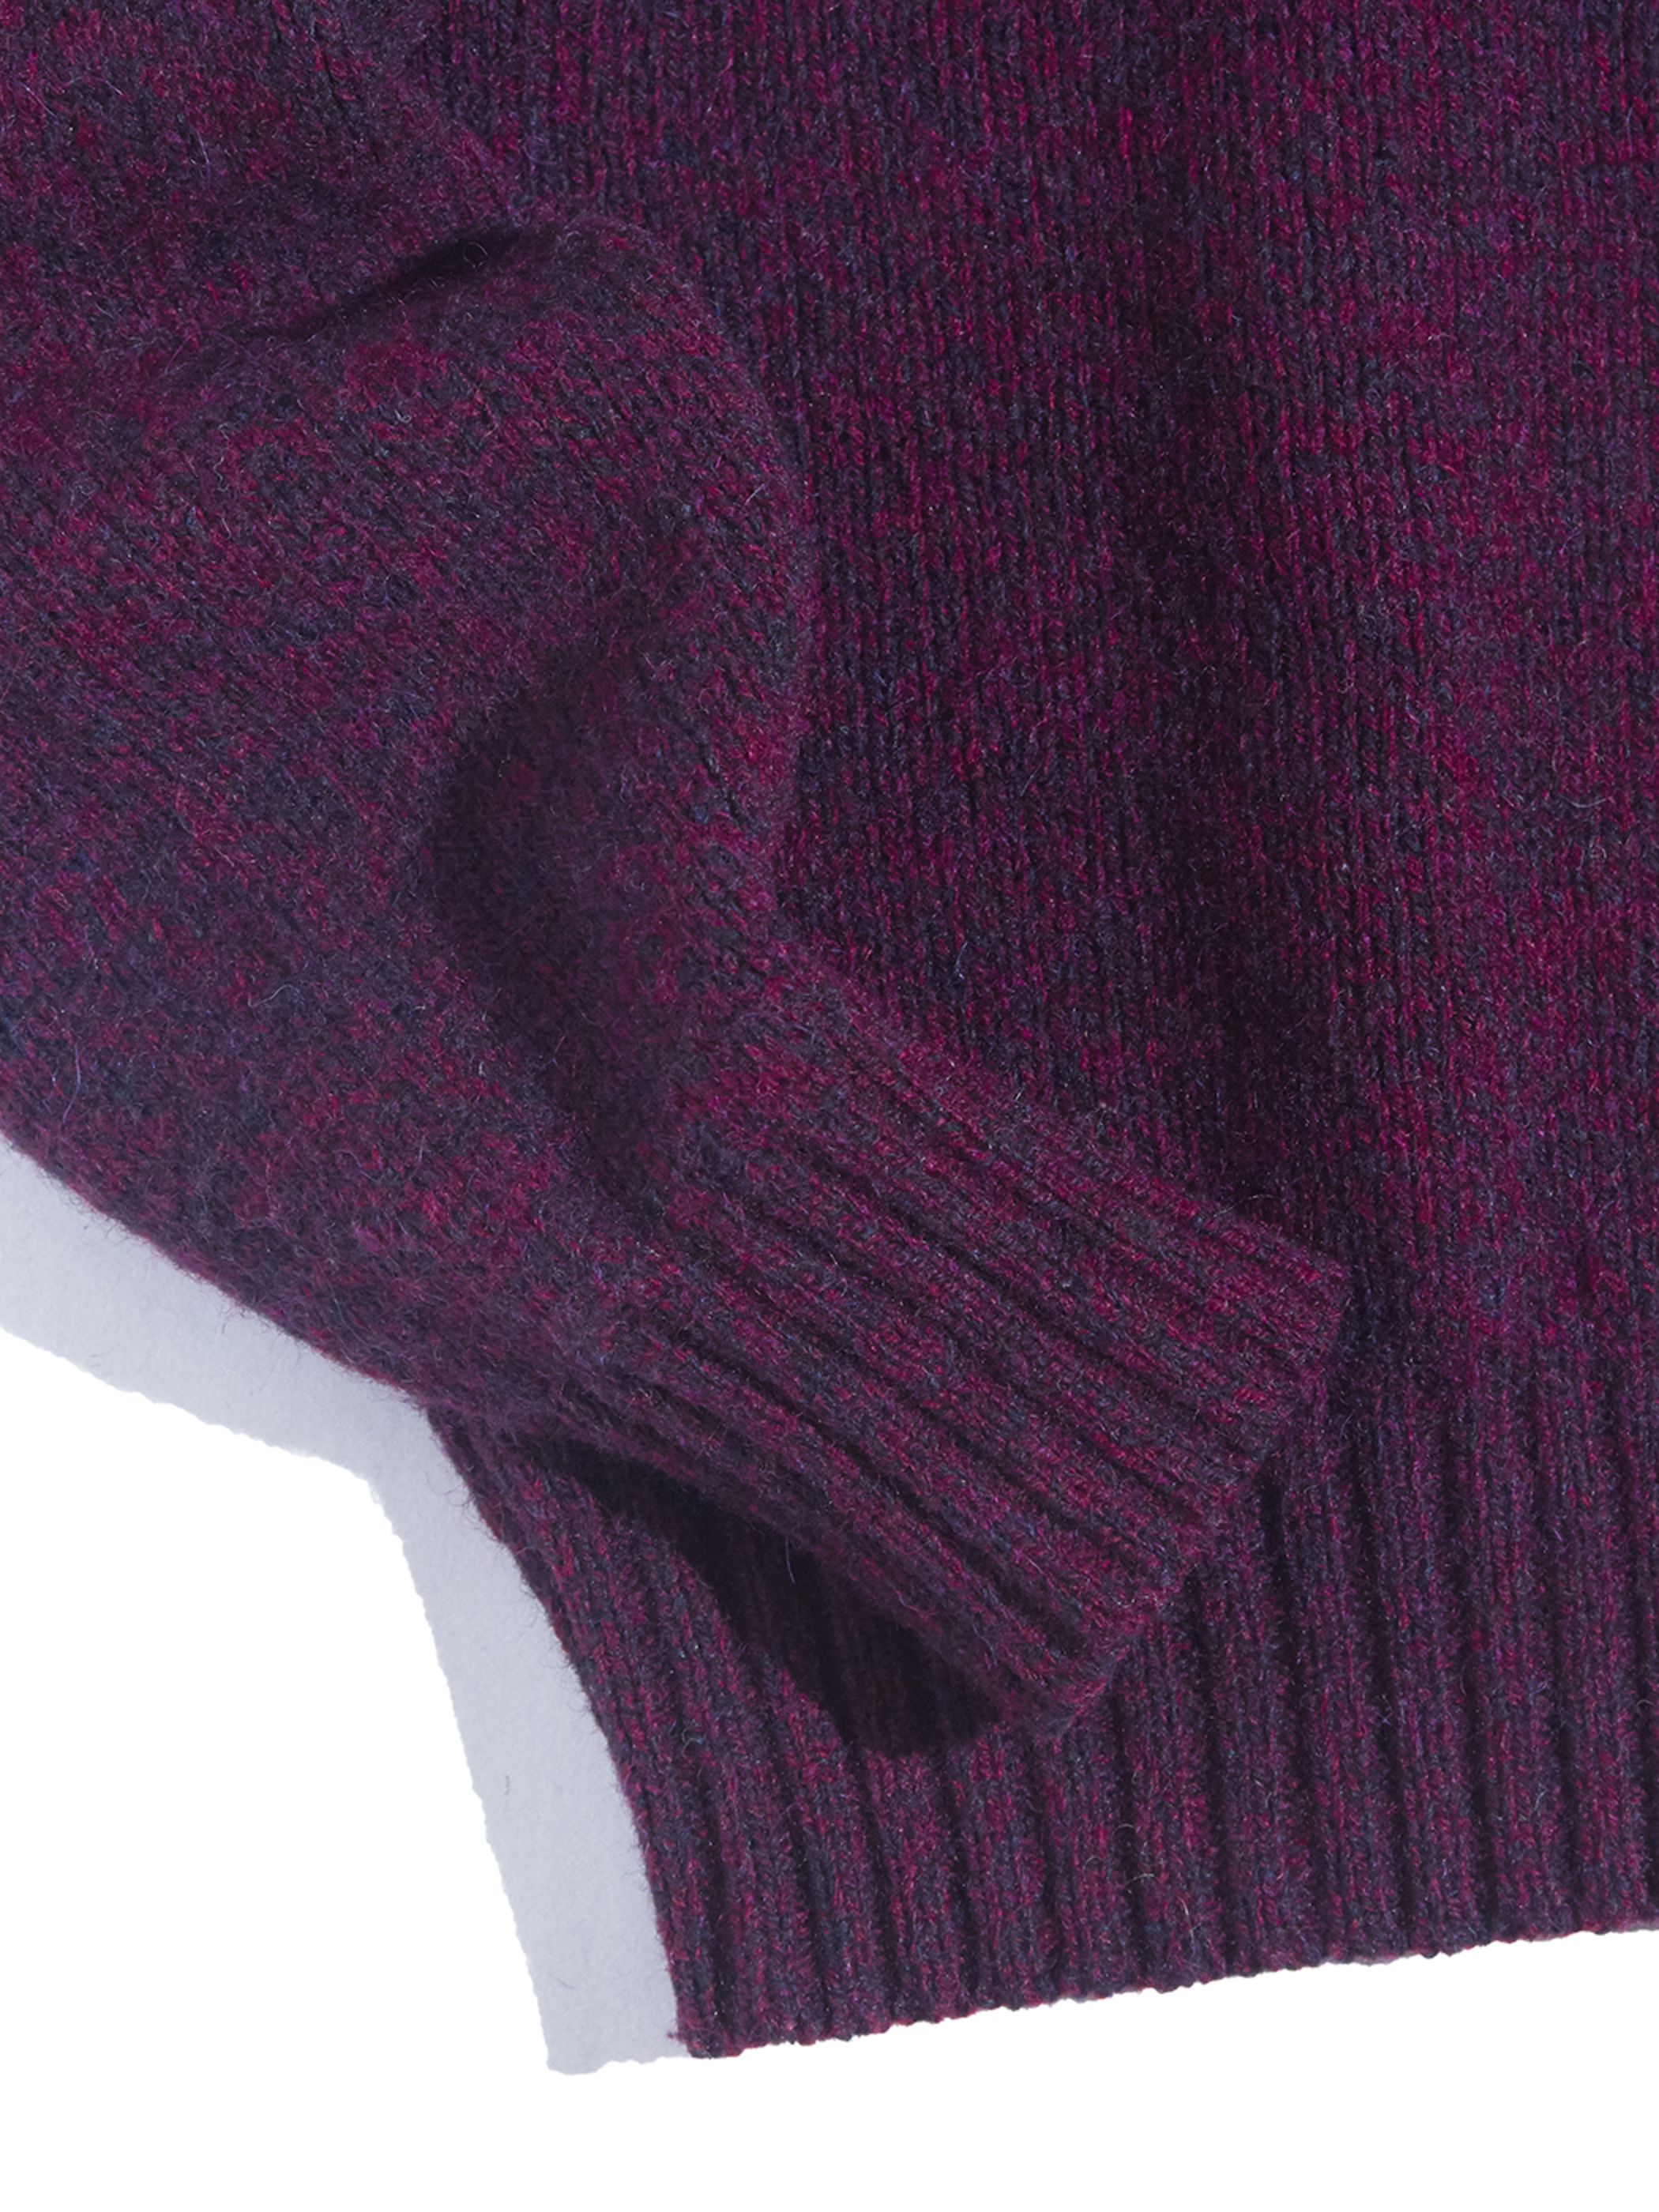 1990s "POPLAR" wool melange knit -BURGANDY-